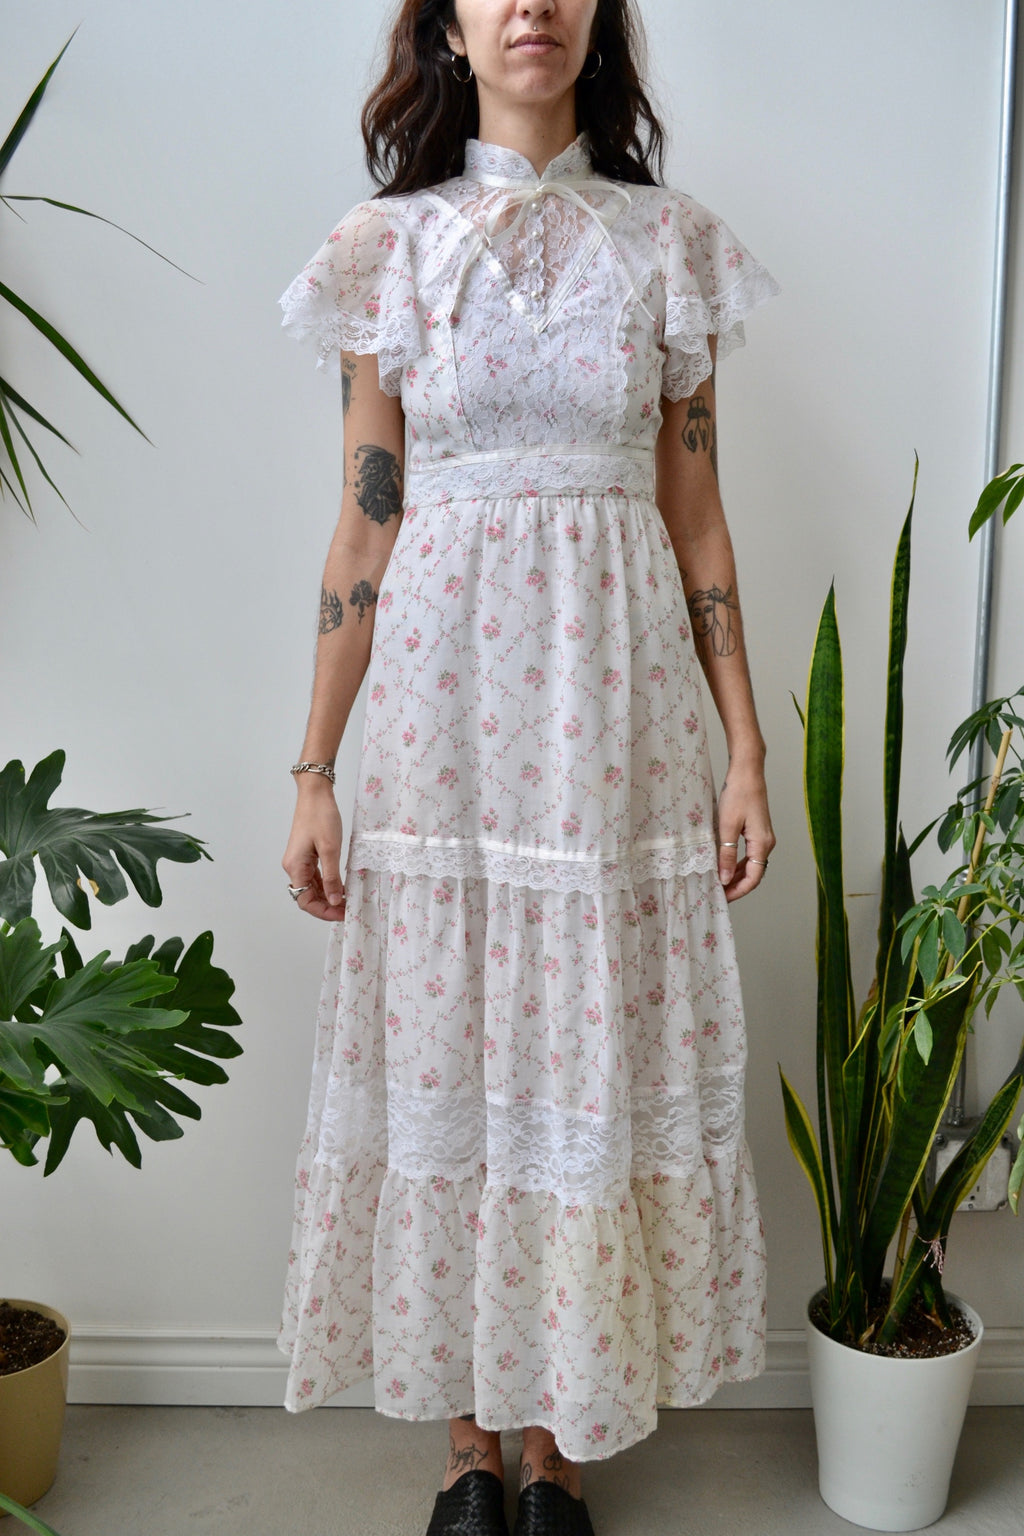 Romantic Floral Prairie Dress